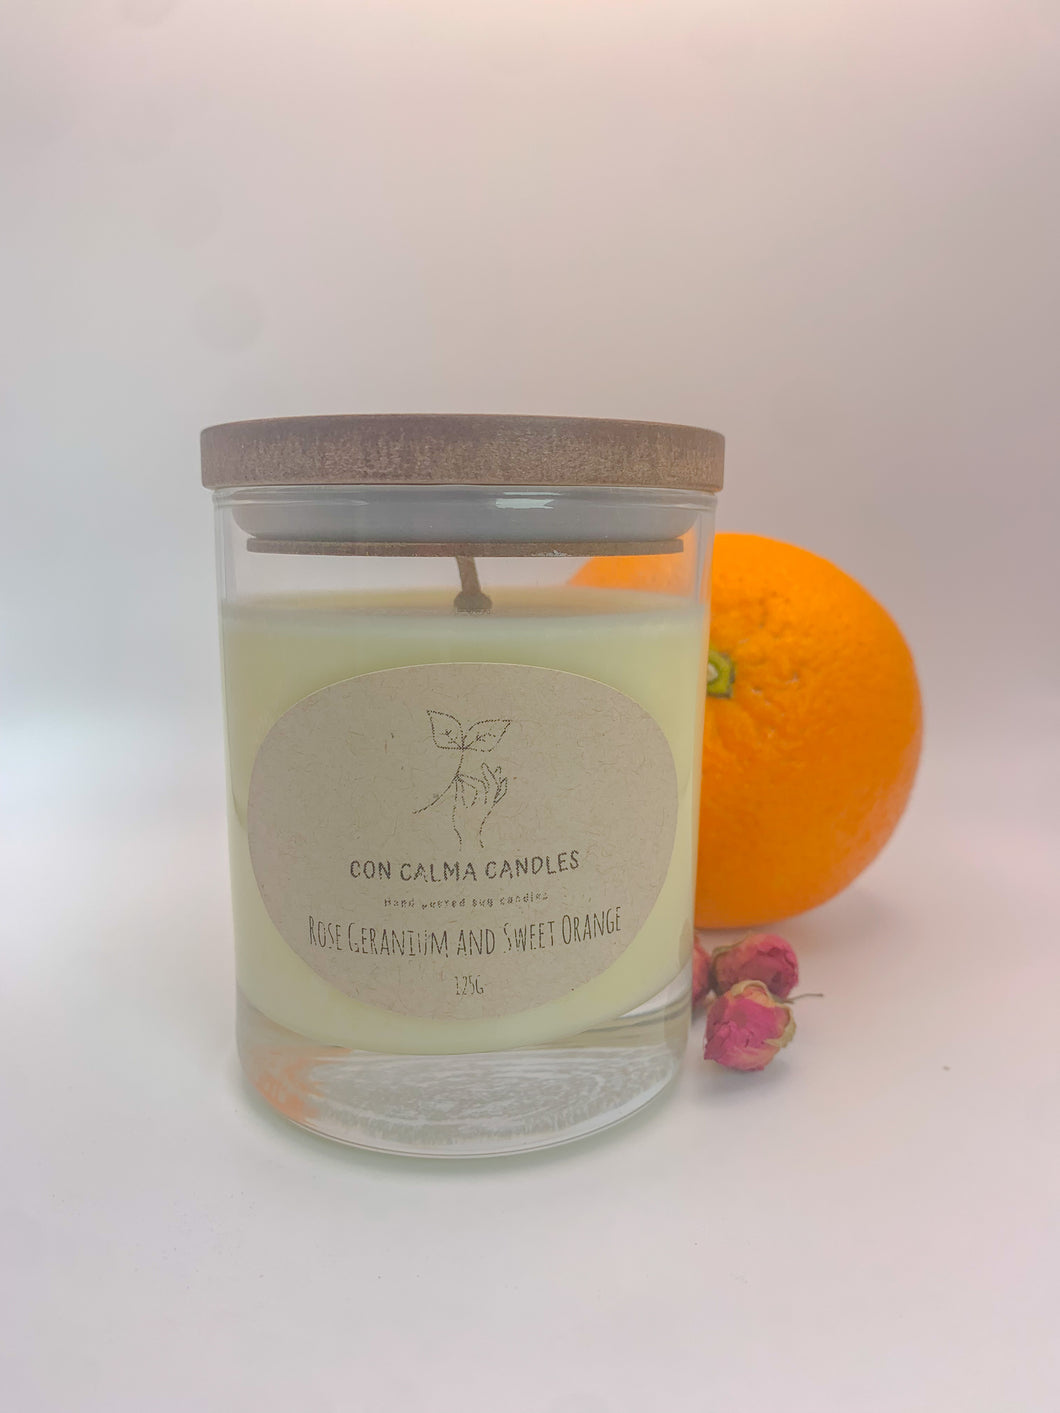 Rose Geranium and Sweet Orange soy wax candle